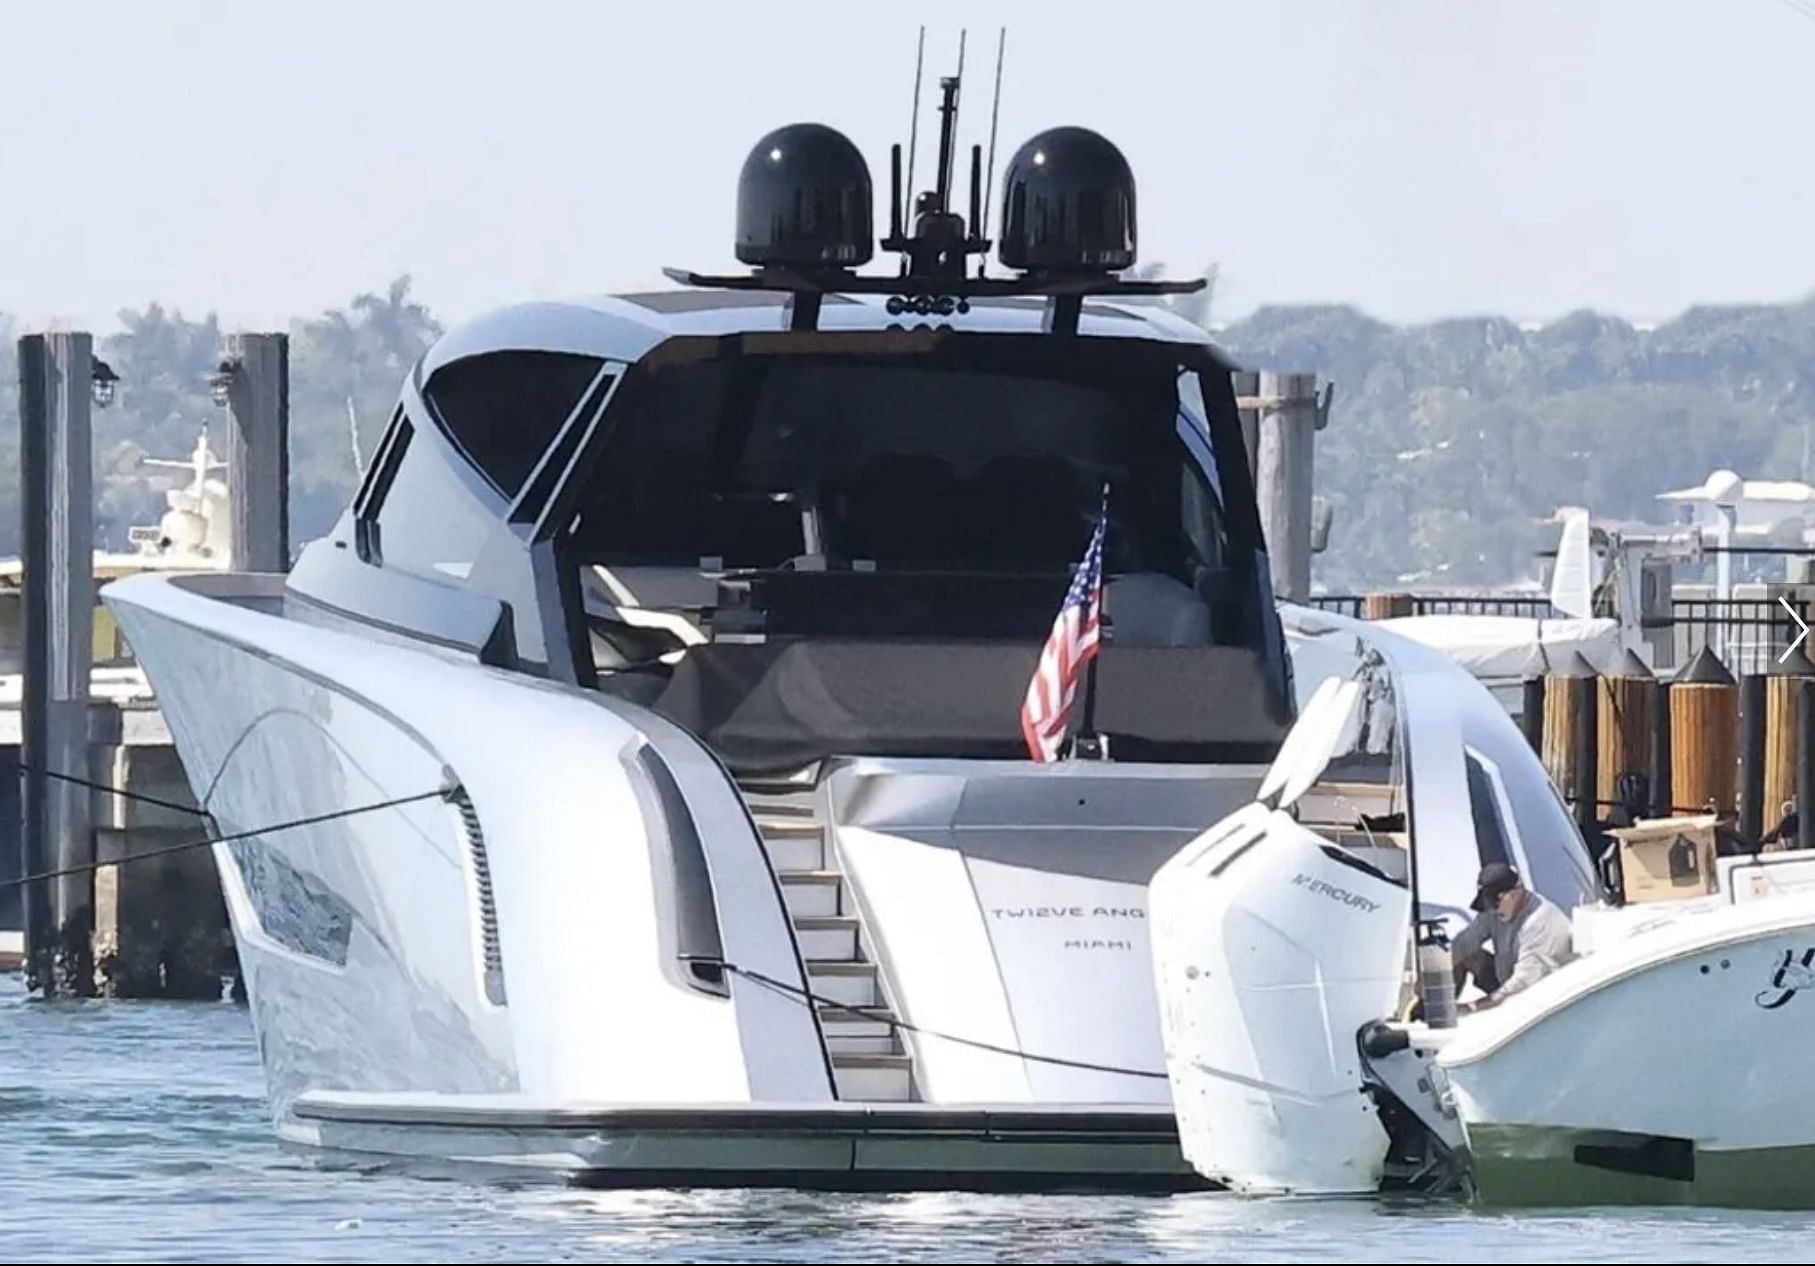 Tom Brady Trades Up (To His Next Yacht): The $6 Million Wajer 77